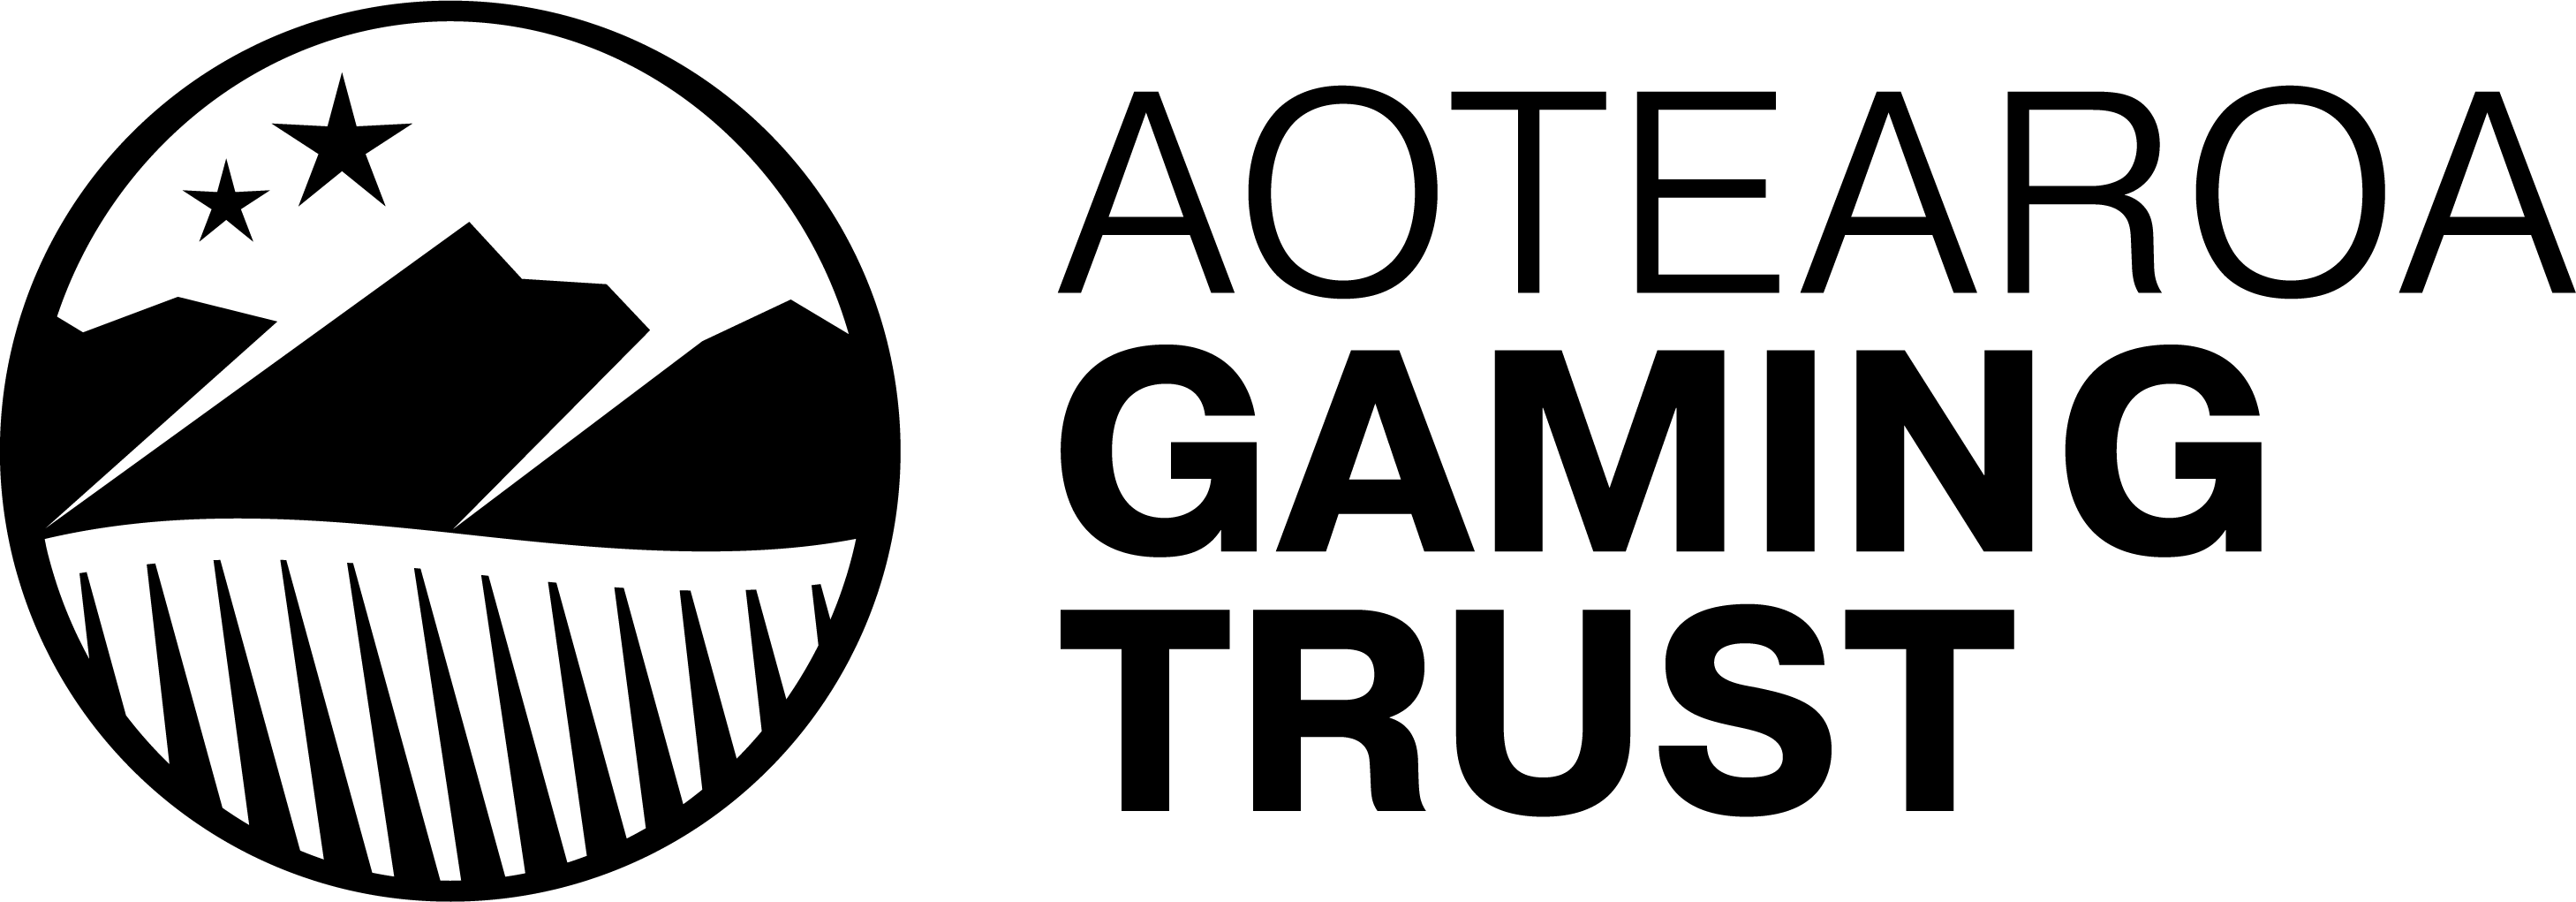 Aotearoa Gaming Trust Logo